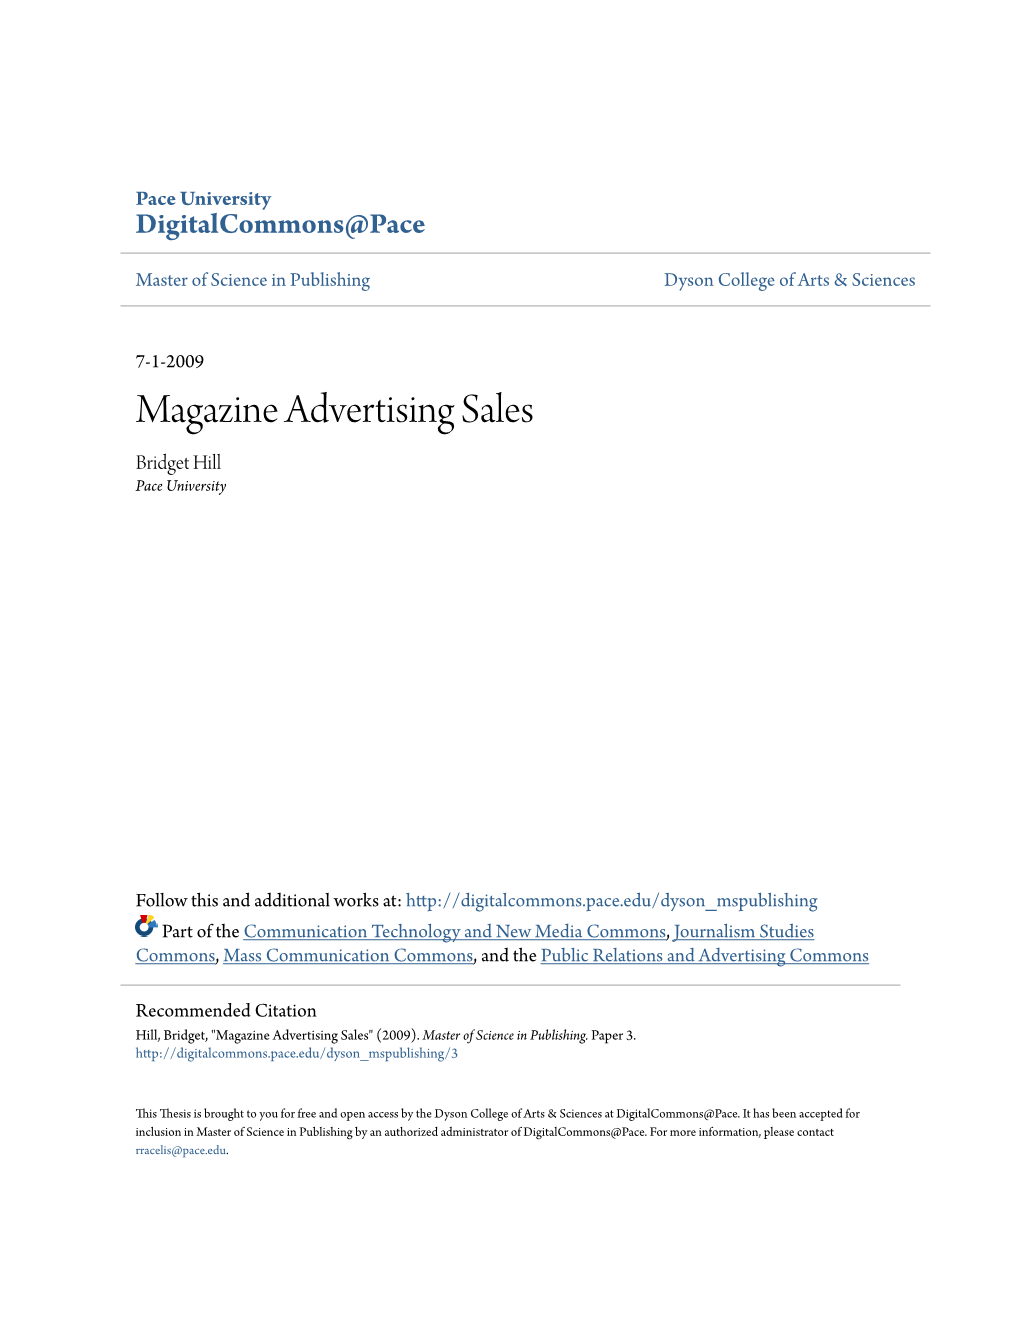 Magazine Advertising Sales Bridget Hill Pace University